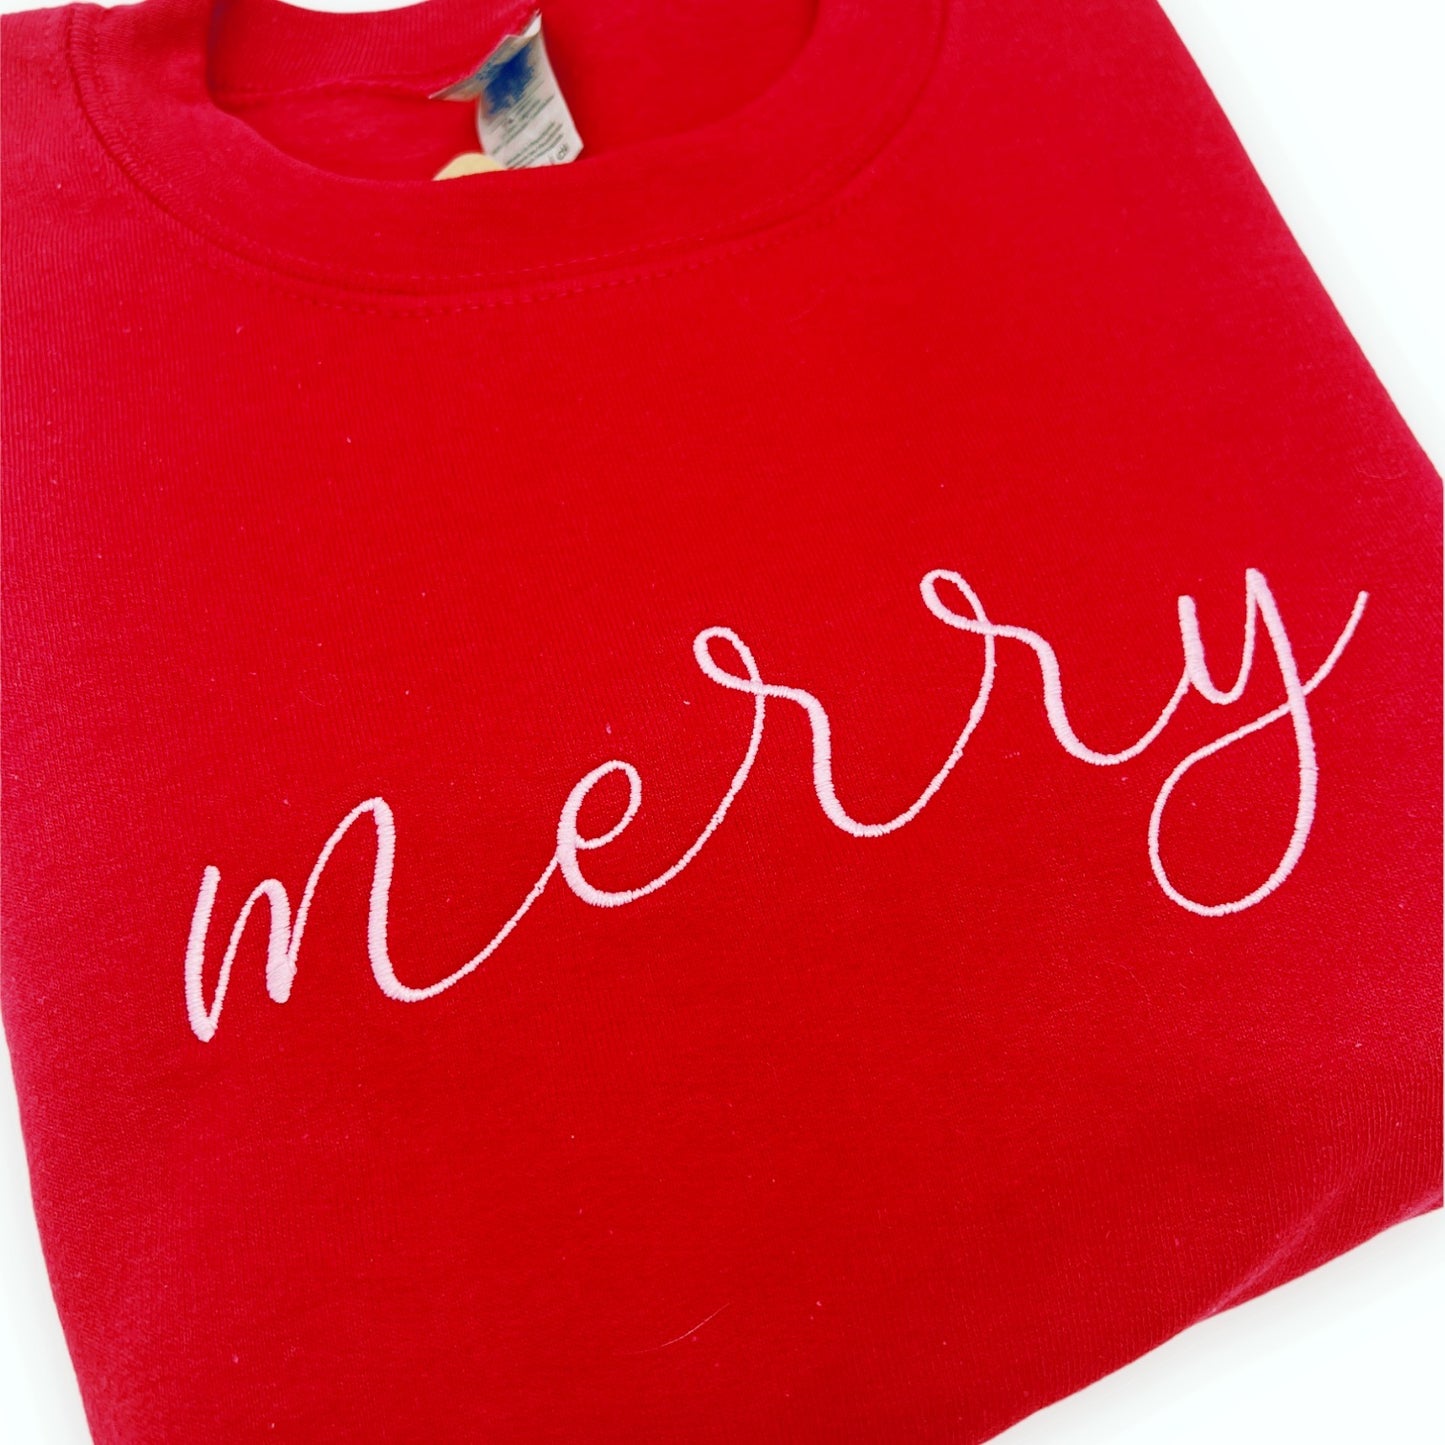 The Merry Sweatshirt